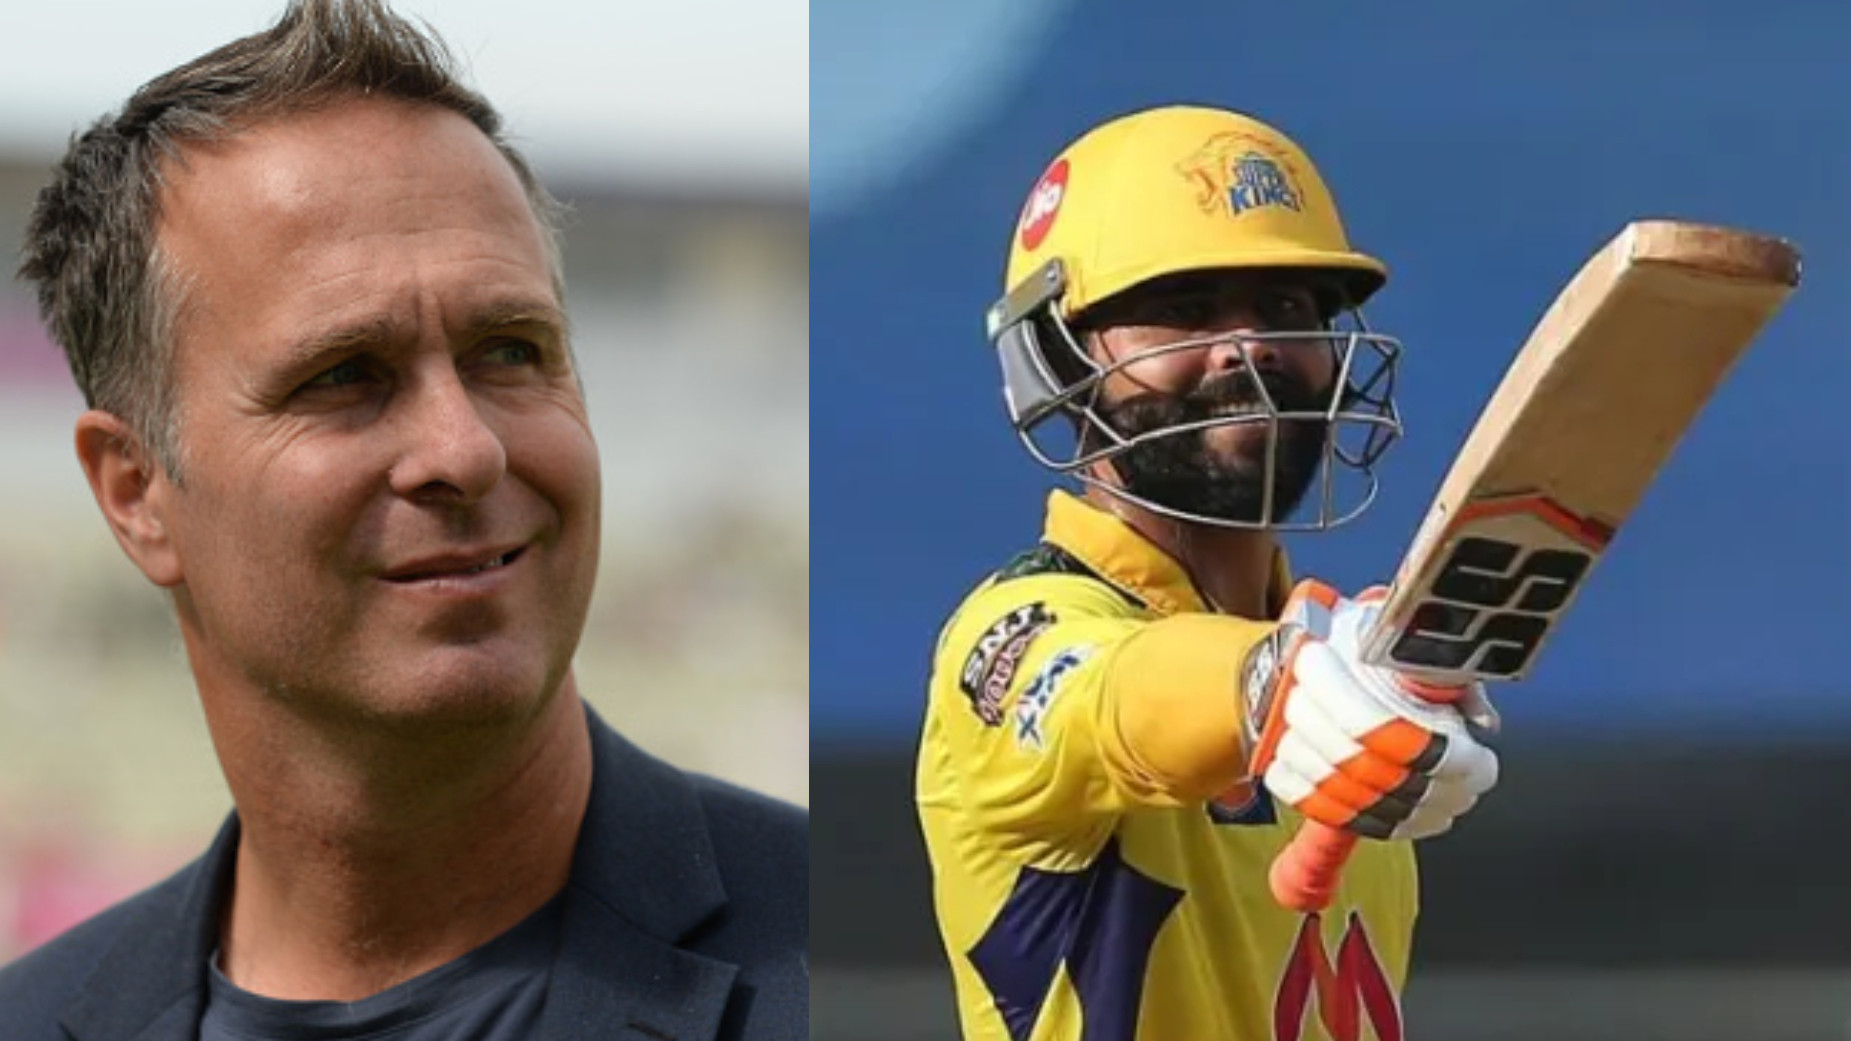 IPL 2021: Michael Vaughan calls Ravindra Jadeja the perfect T20 cricketer, says he offers everything